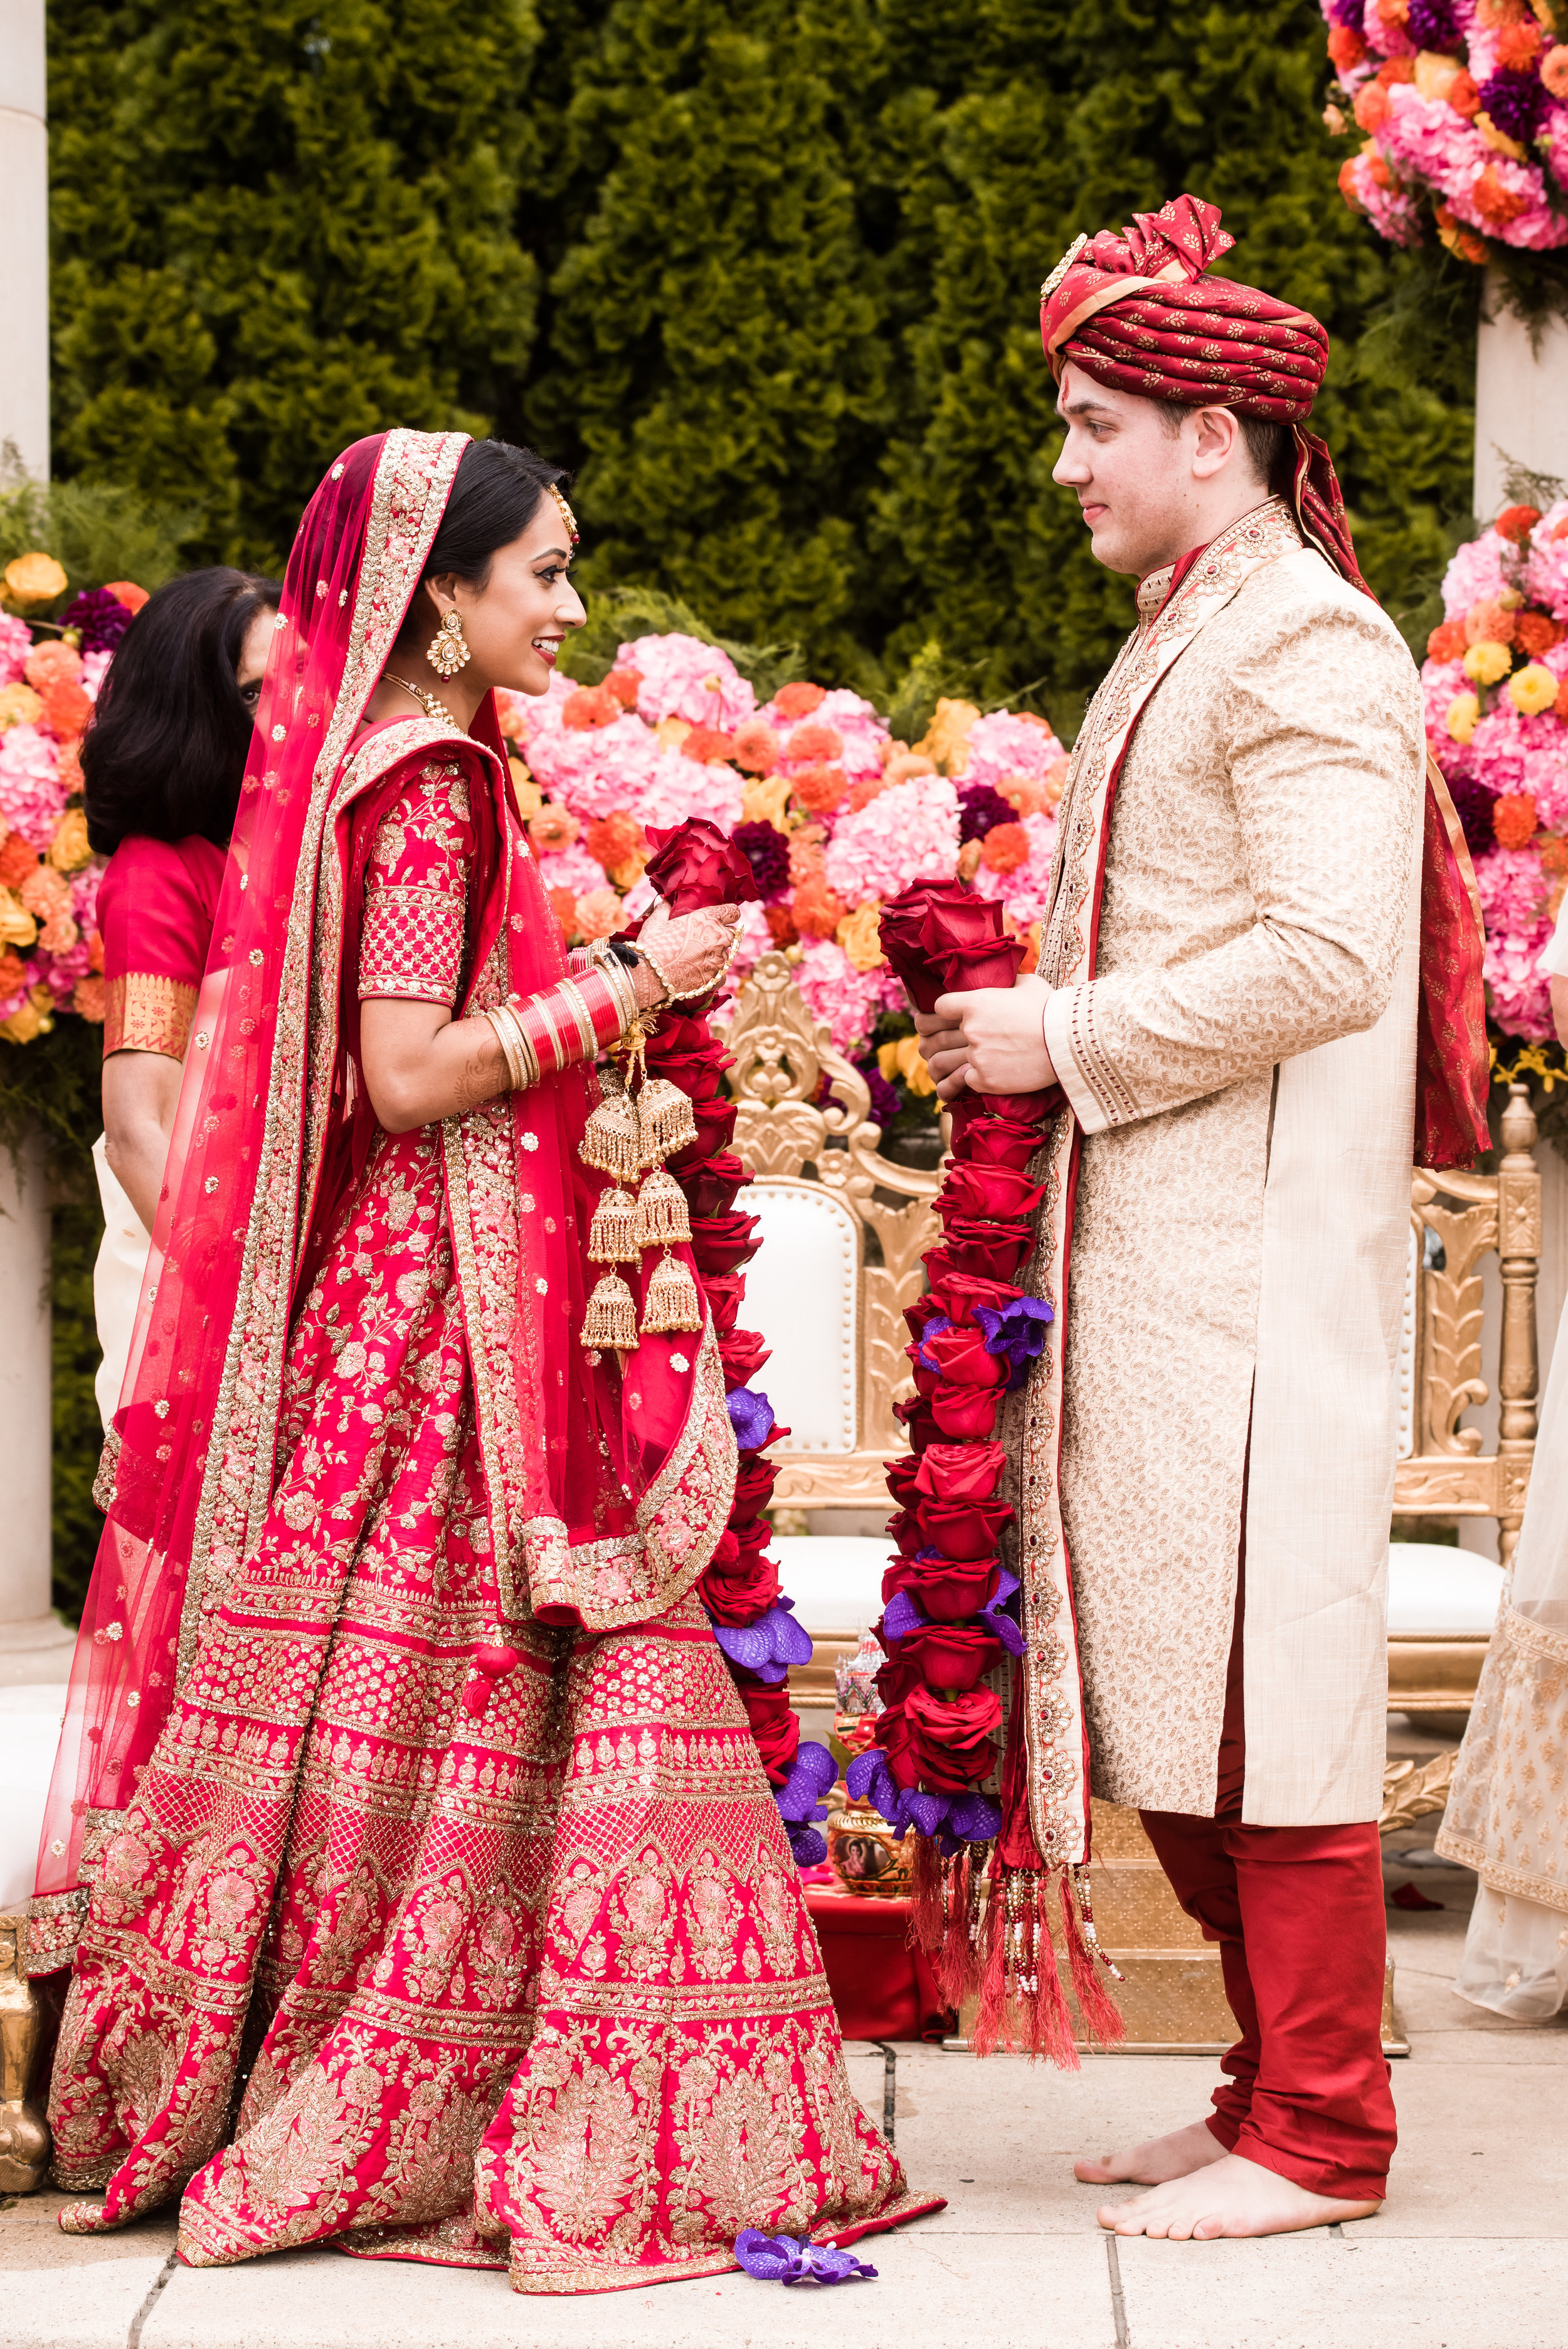 INDIAN WEDDING BRIDE AND GROOM CEREMONY.jpg